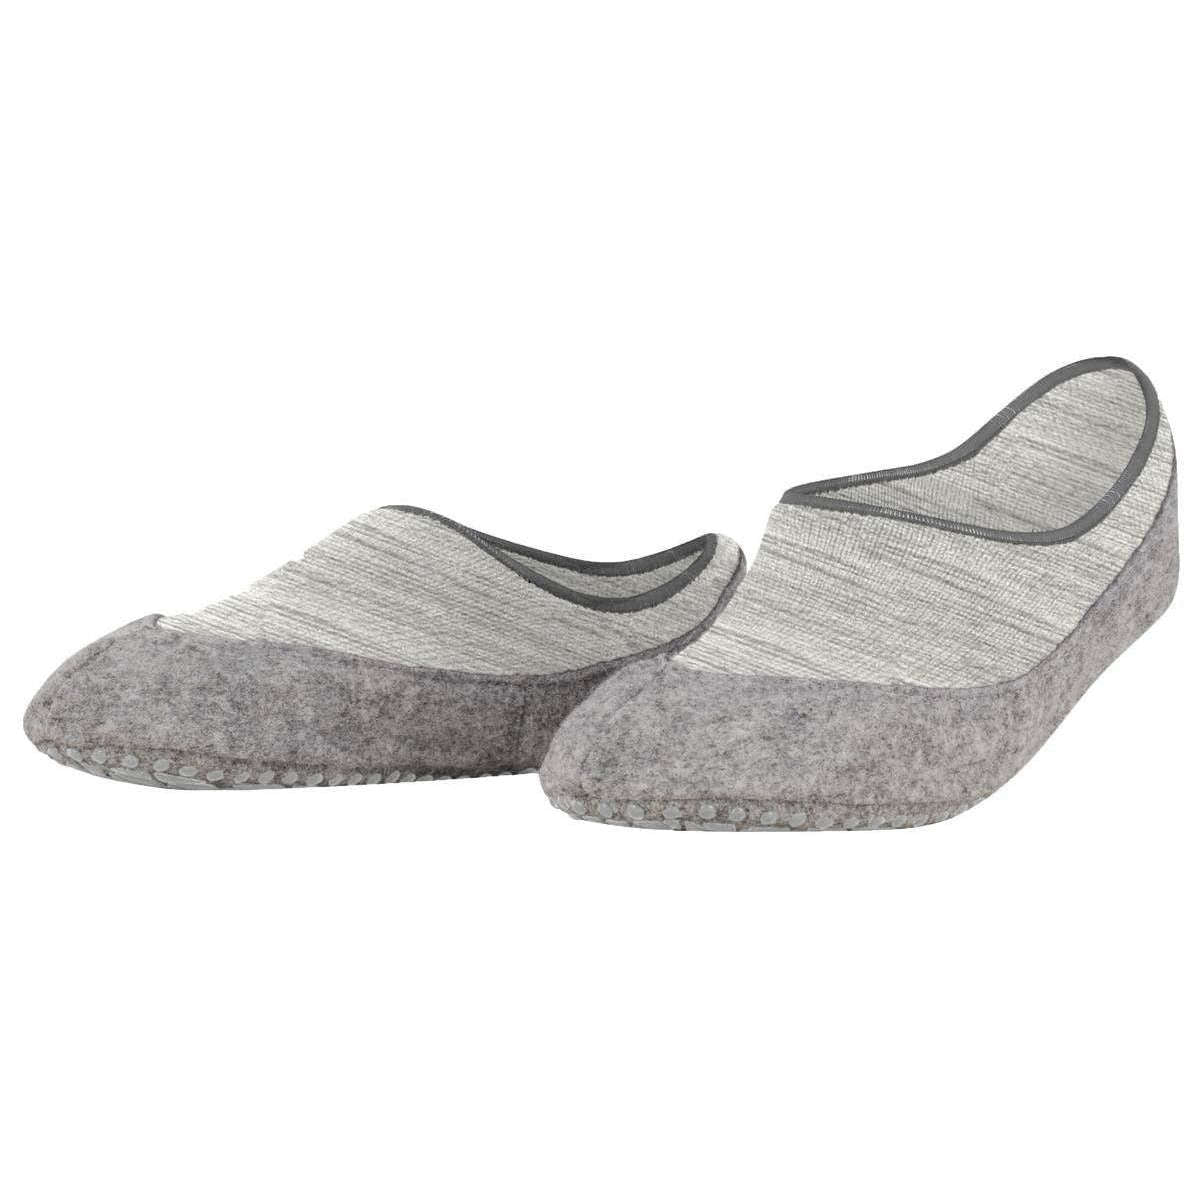 Falke Cosyshoe Invisible Slipper Socks - Light Grey Marl - Small - 4-5 UK | 6.5-7.5 US | 37-38 EUR